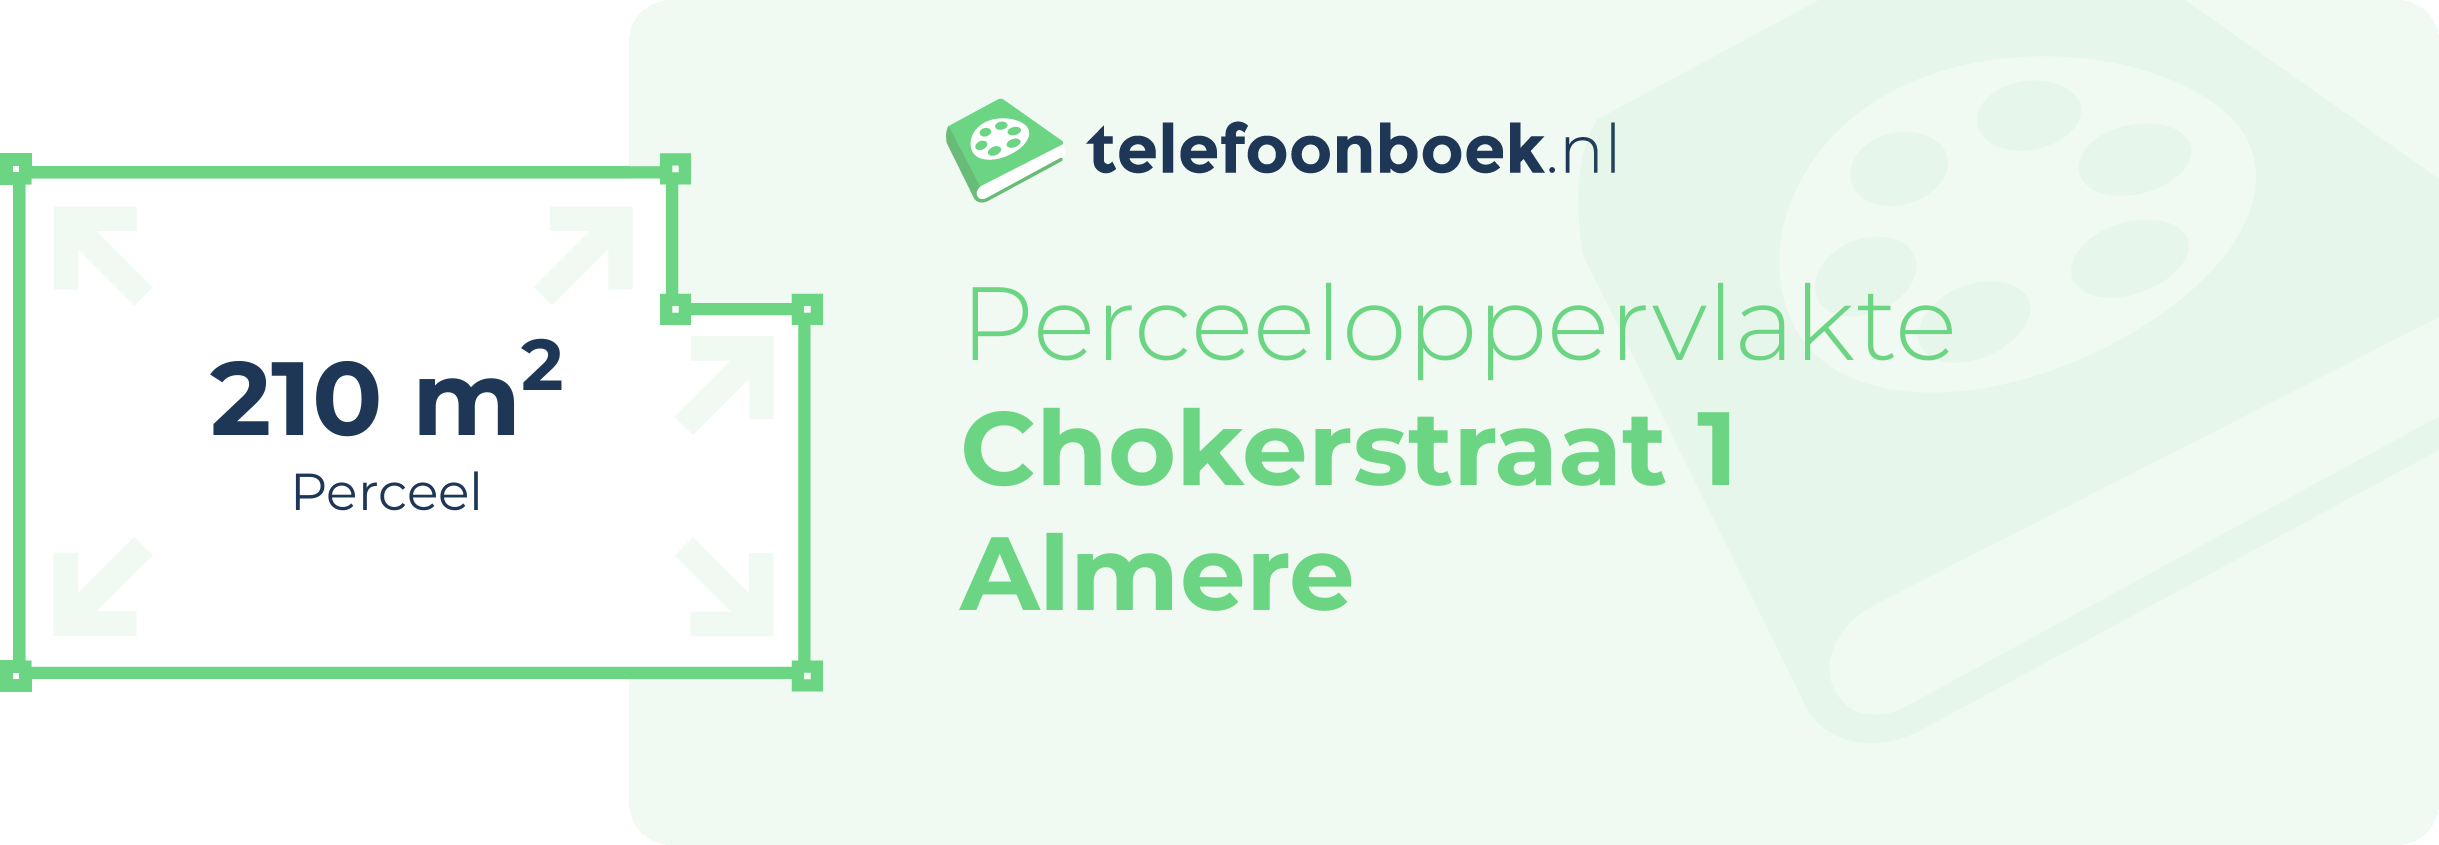 Perceeloppervlakte Chokerstraat 1 Almere